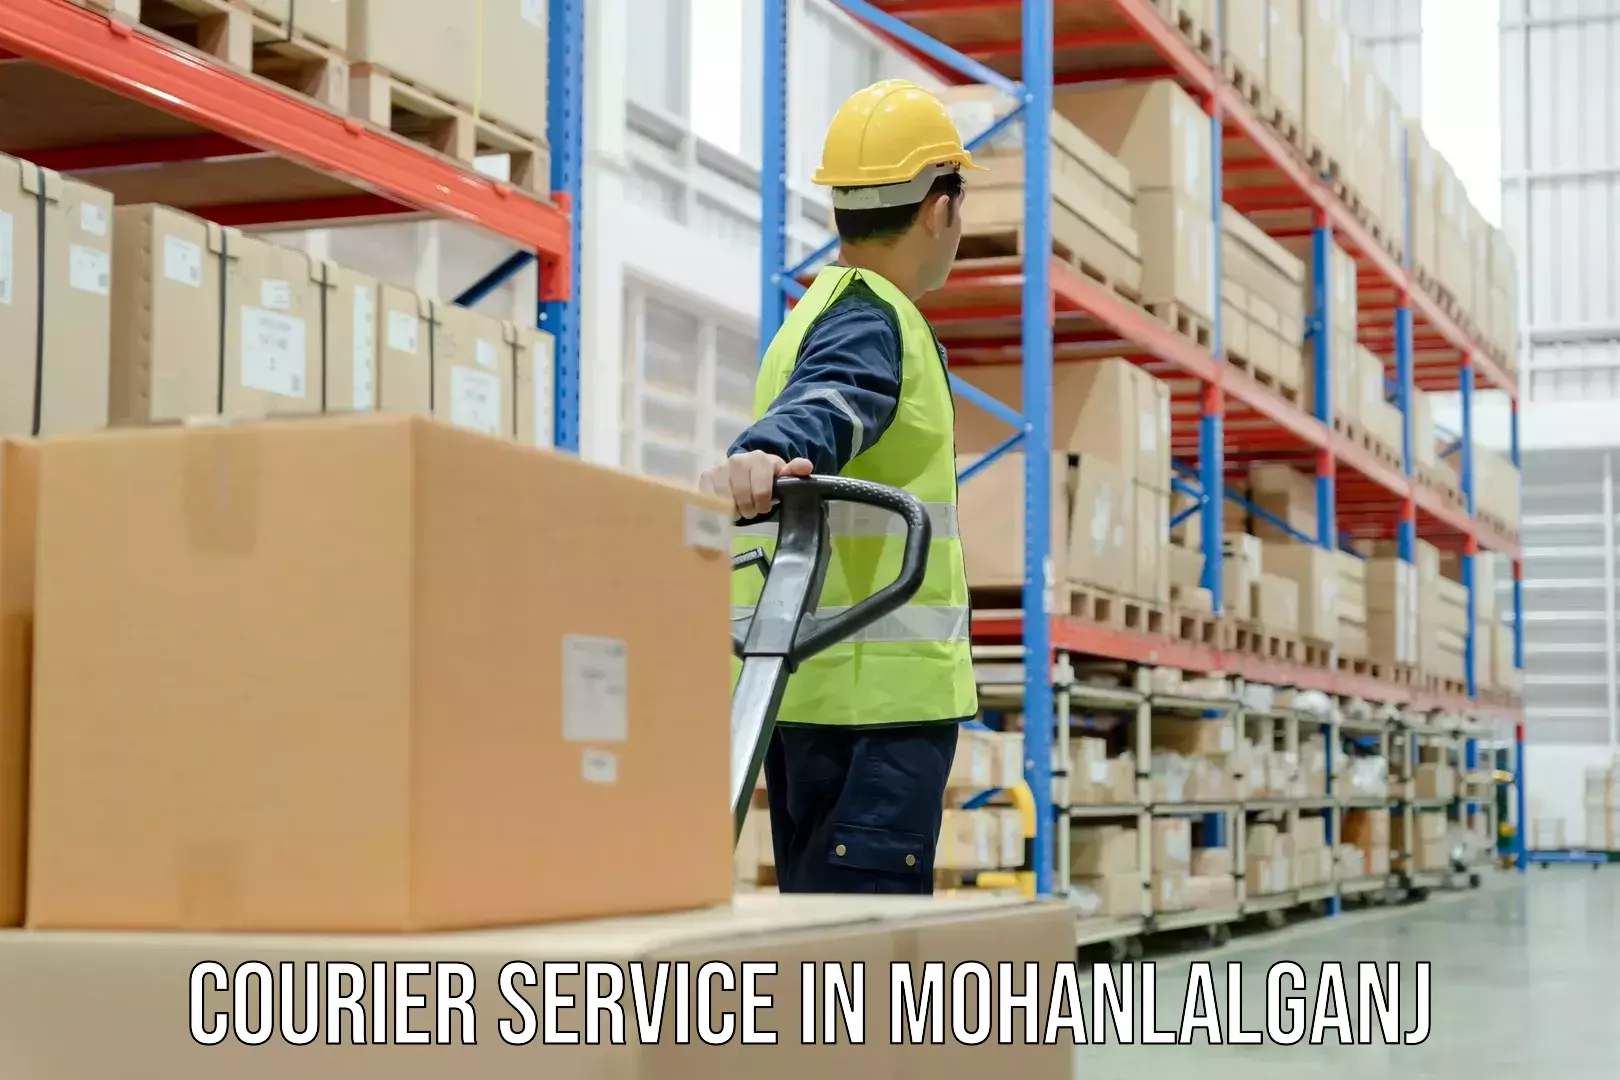 Efficient order fulfillment in Mohanlalganj